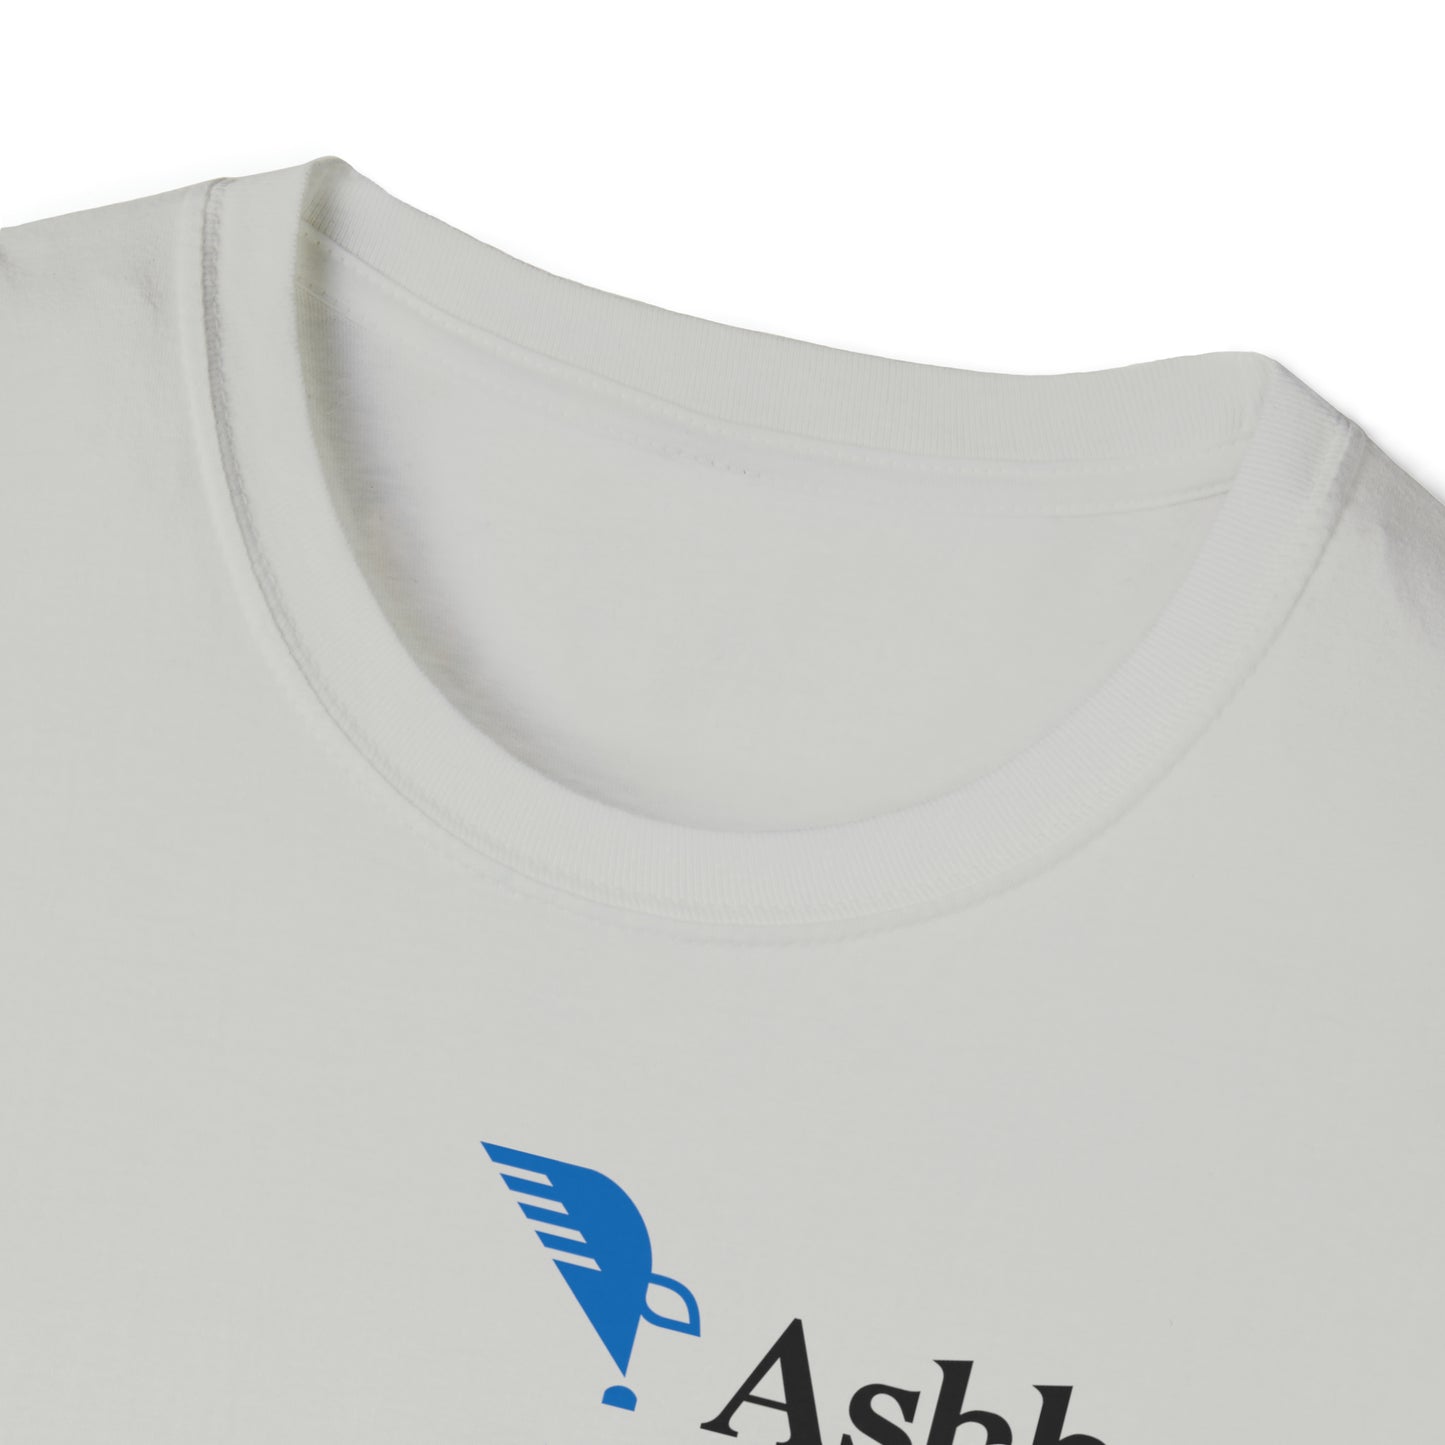 Ashbrook Scholar Unisex Softstyle T-Shirt